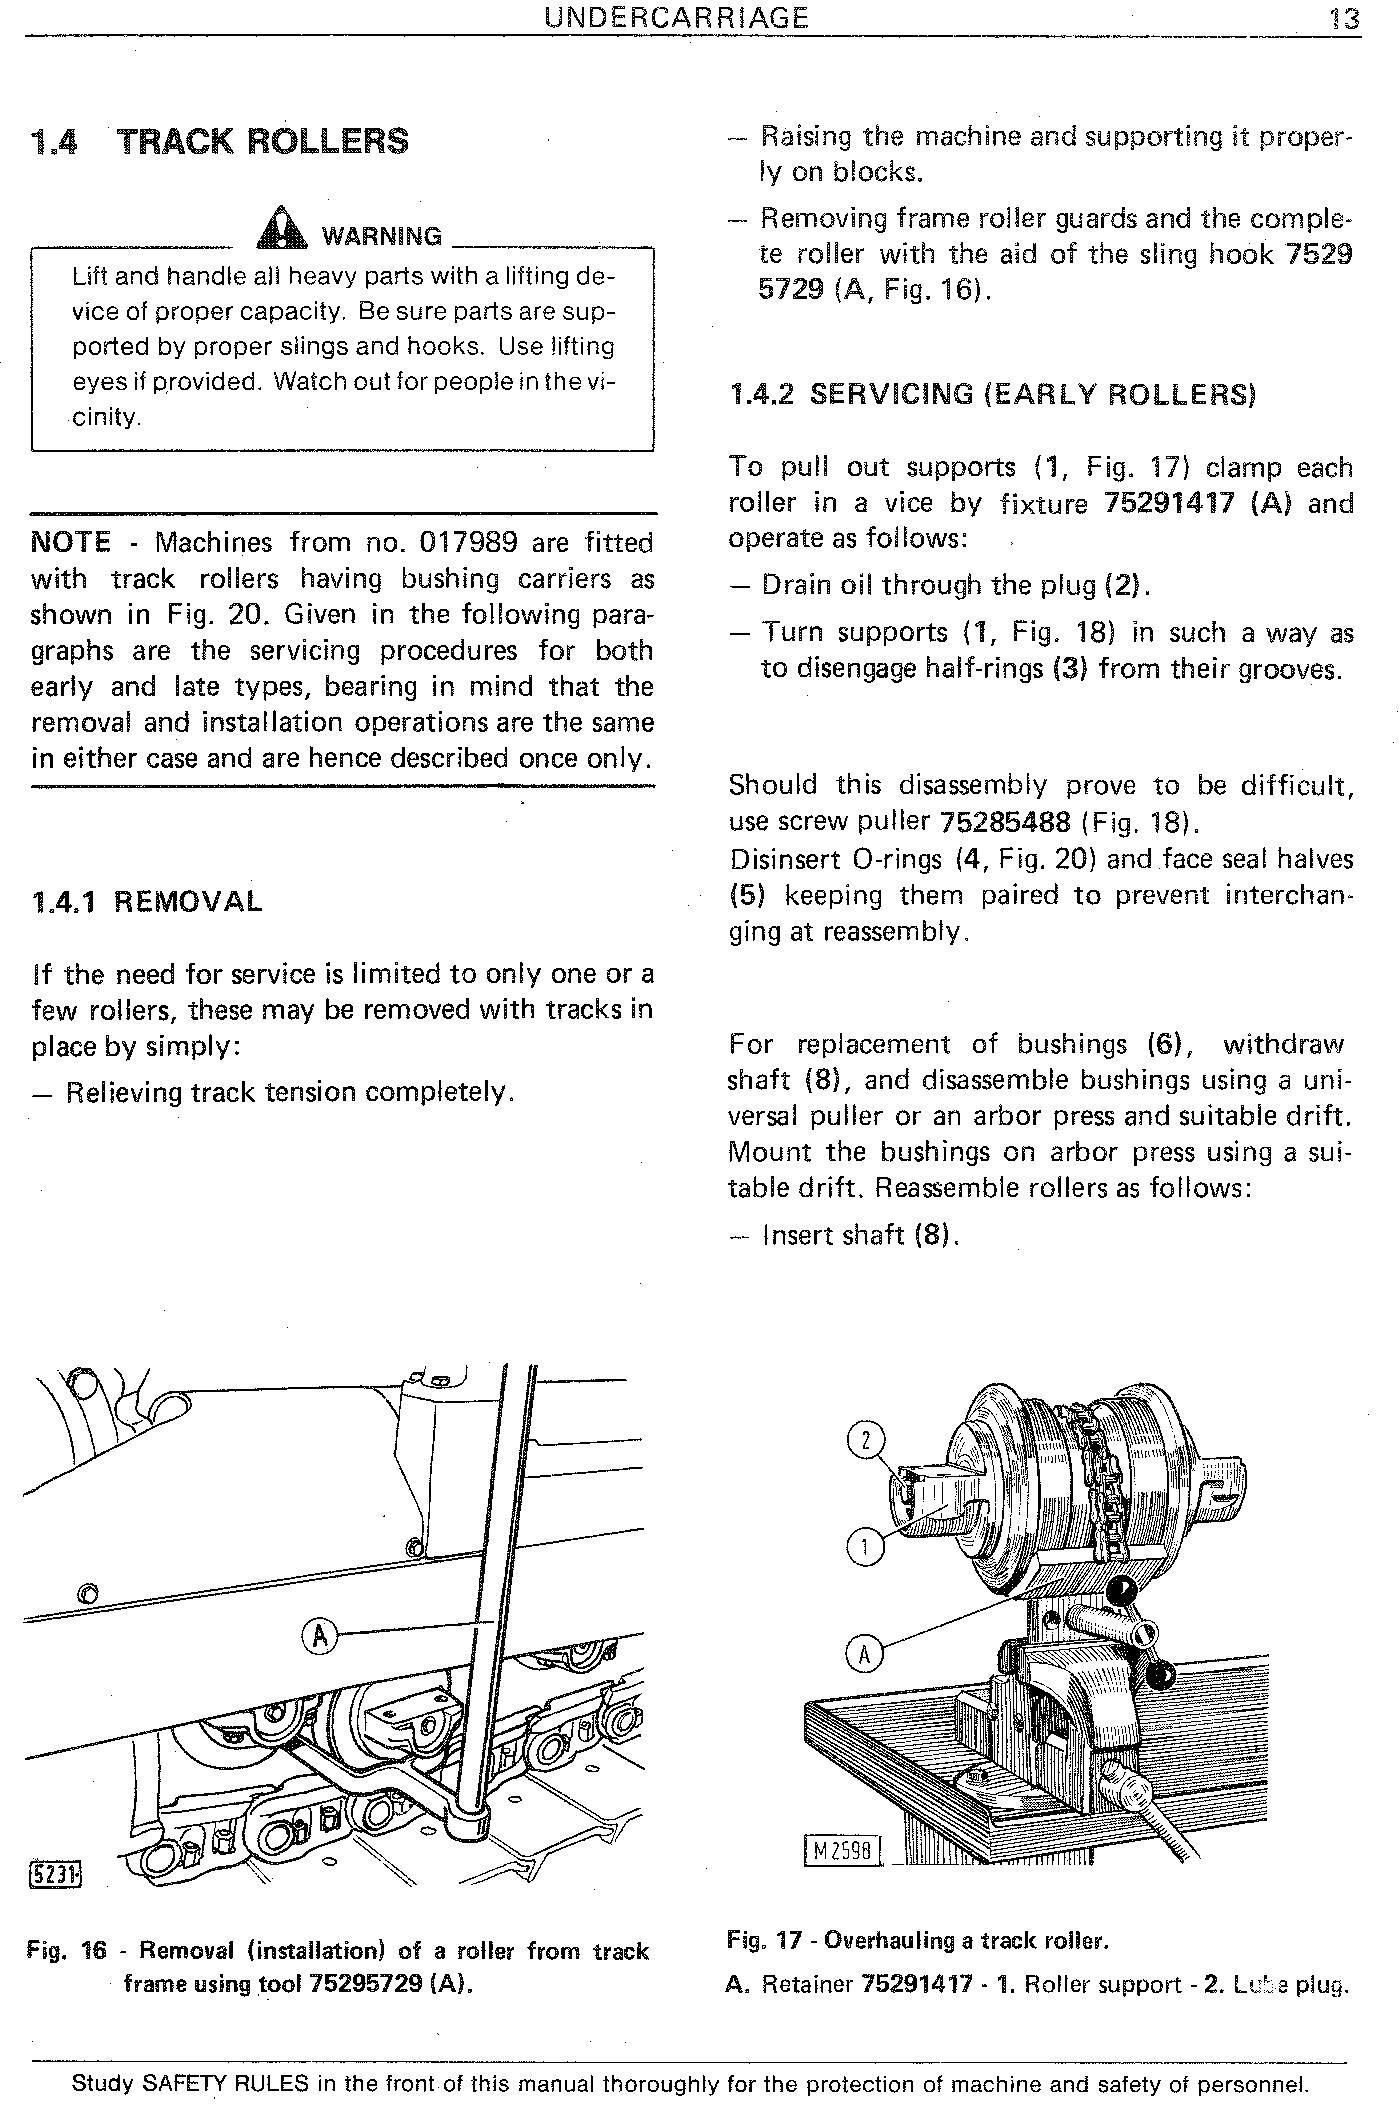 Fiat-Allis14C Crawler Dozer with 8365 Engine Service Manual - 3